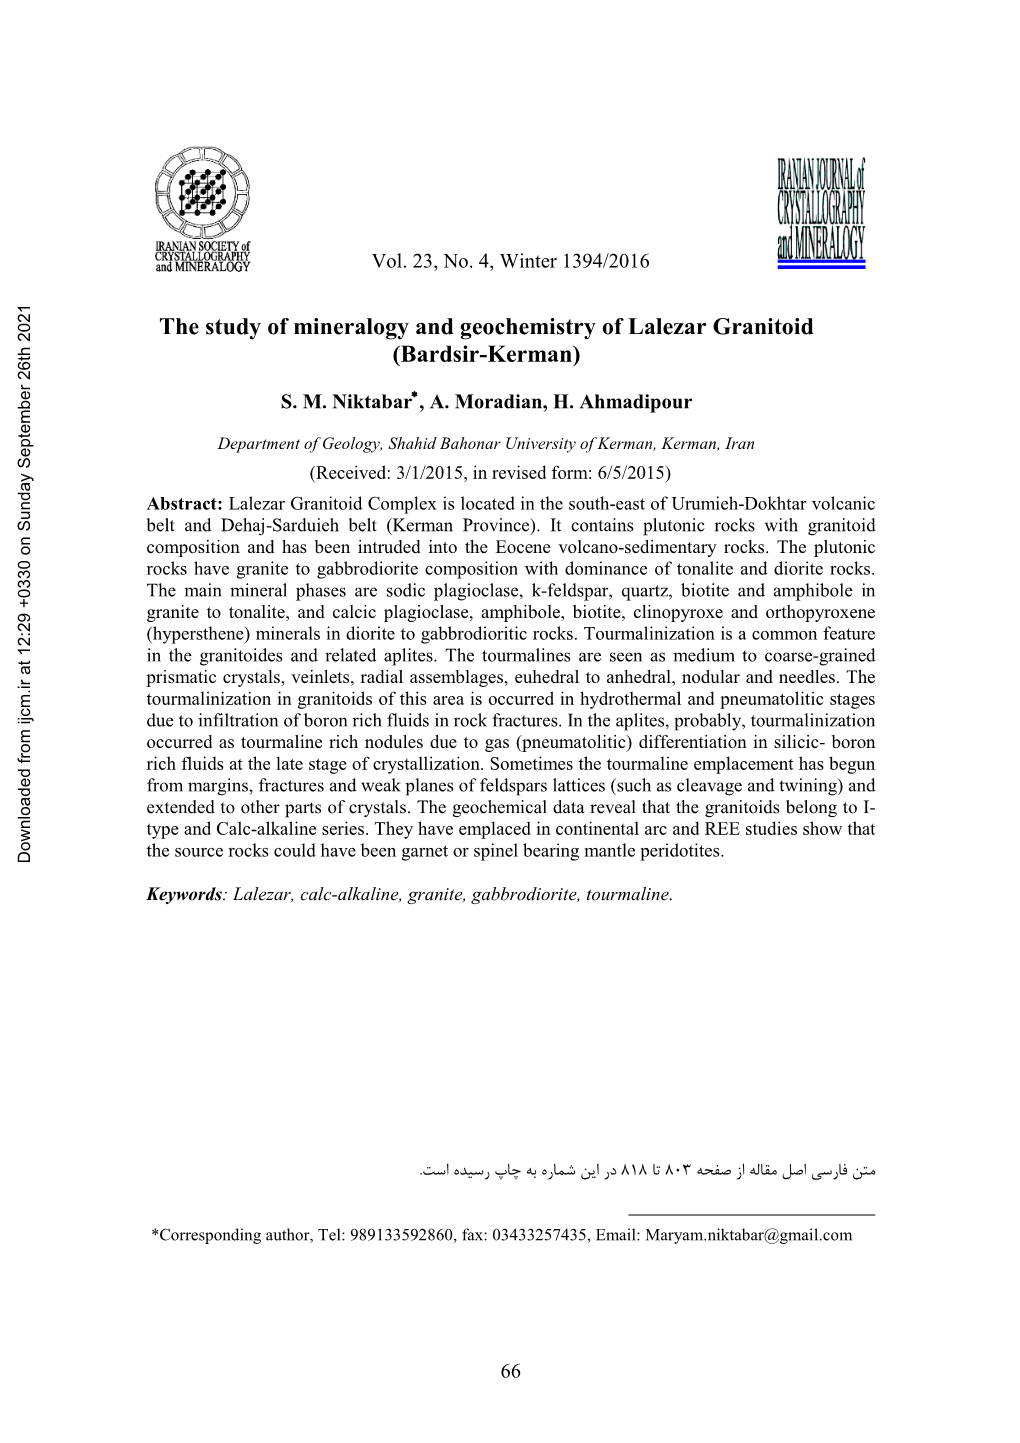 The Study of Mineralogy and Geochemistry of Lalezar Granitoid (Bardsir-Kerman)